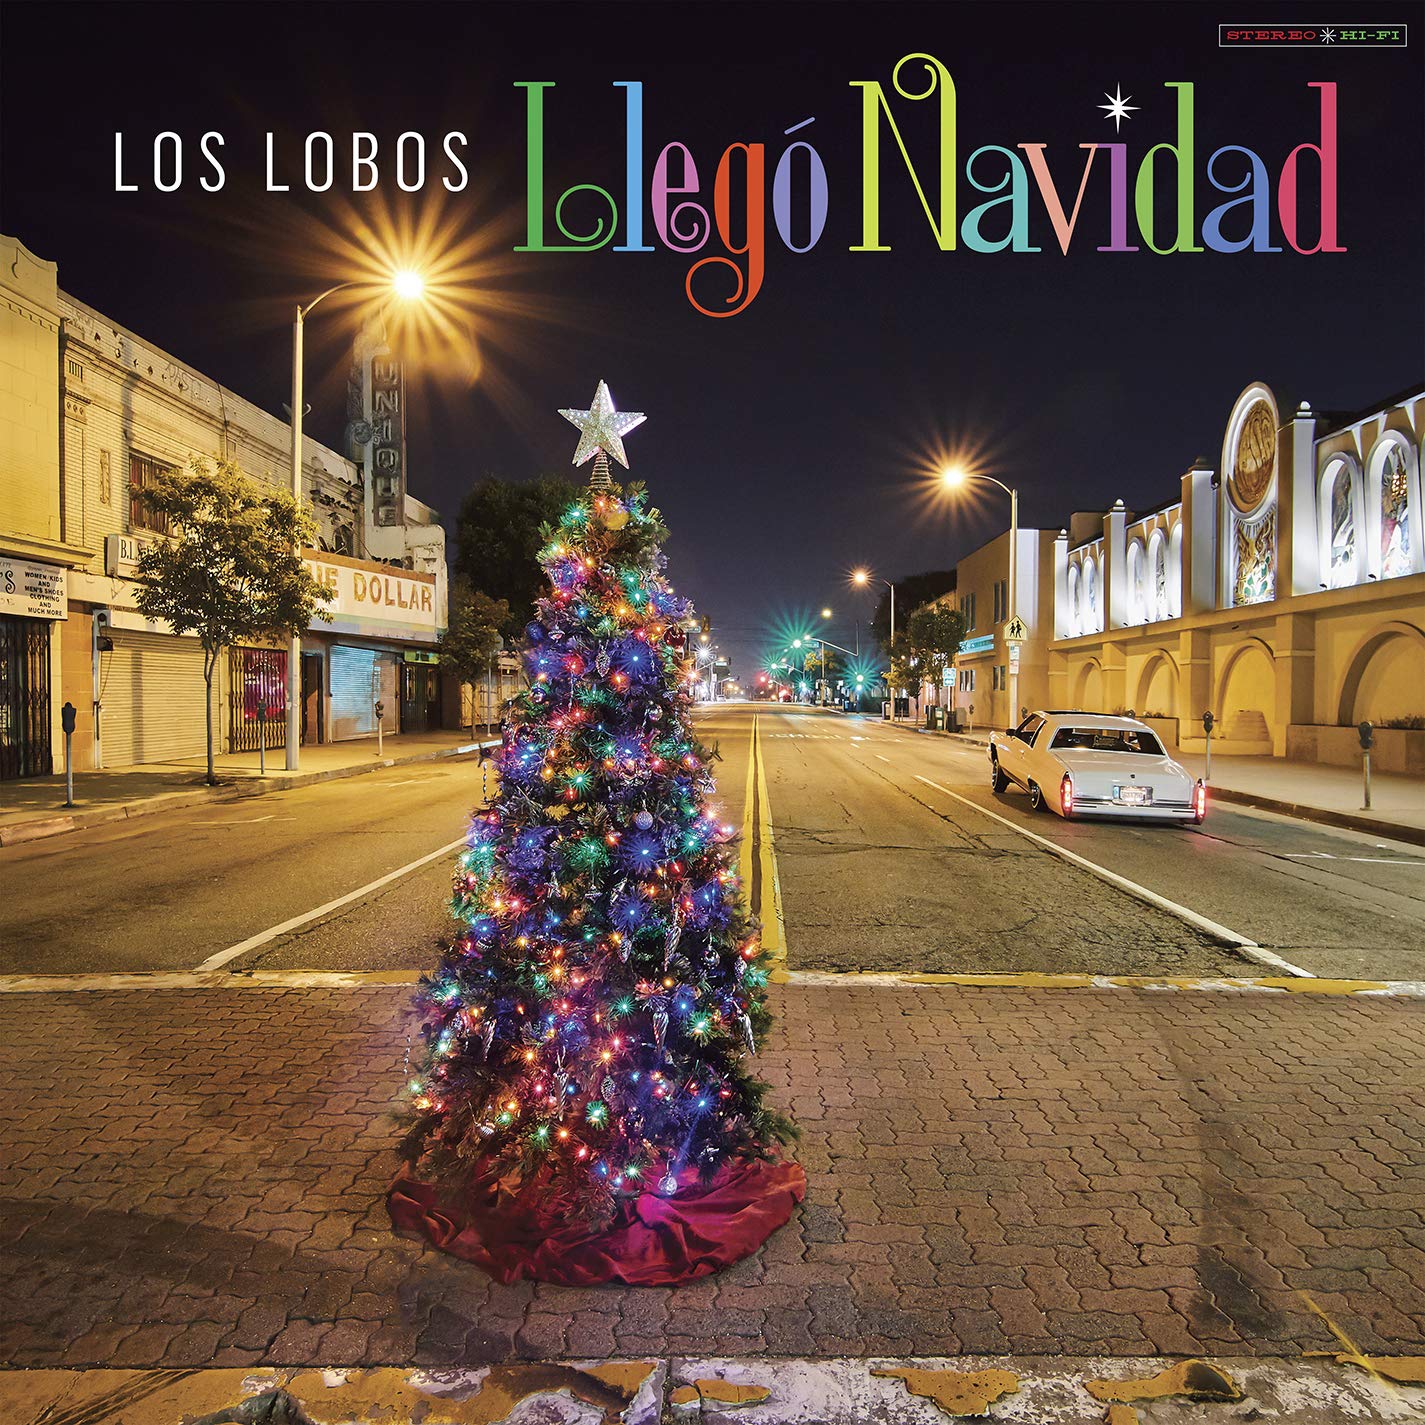 CD: Los Lobos - LLegó Navidad album review - simple, homespun textures